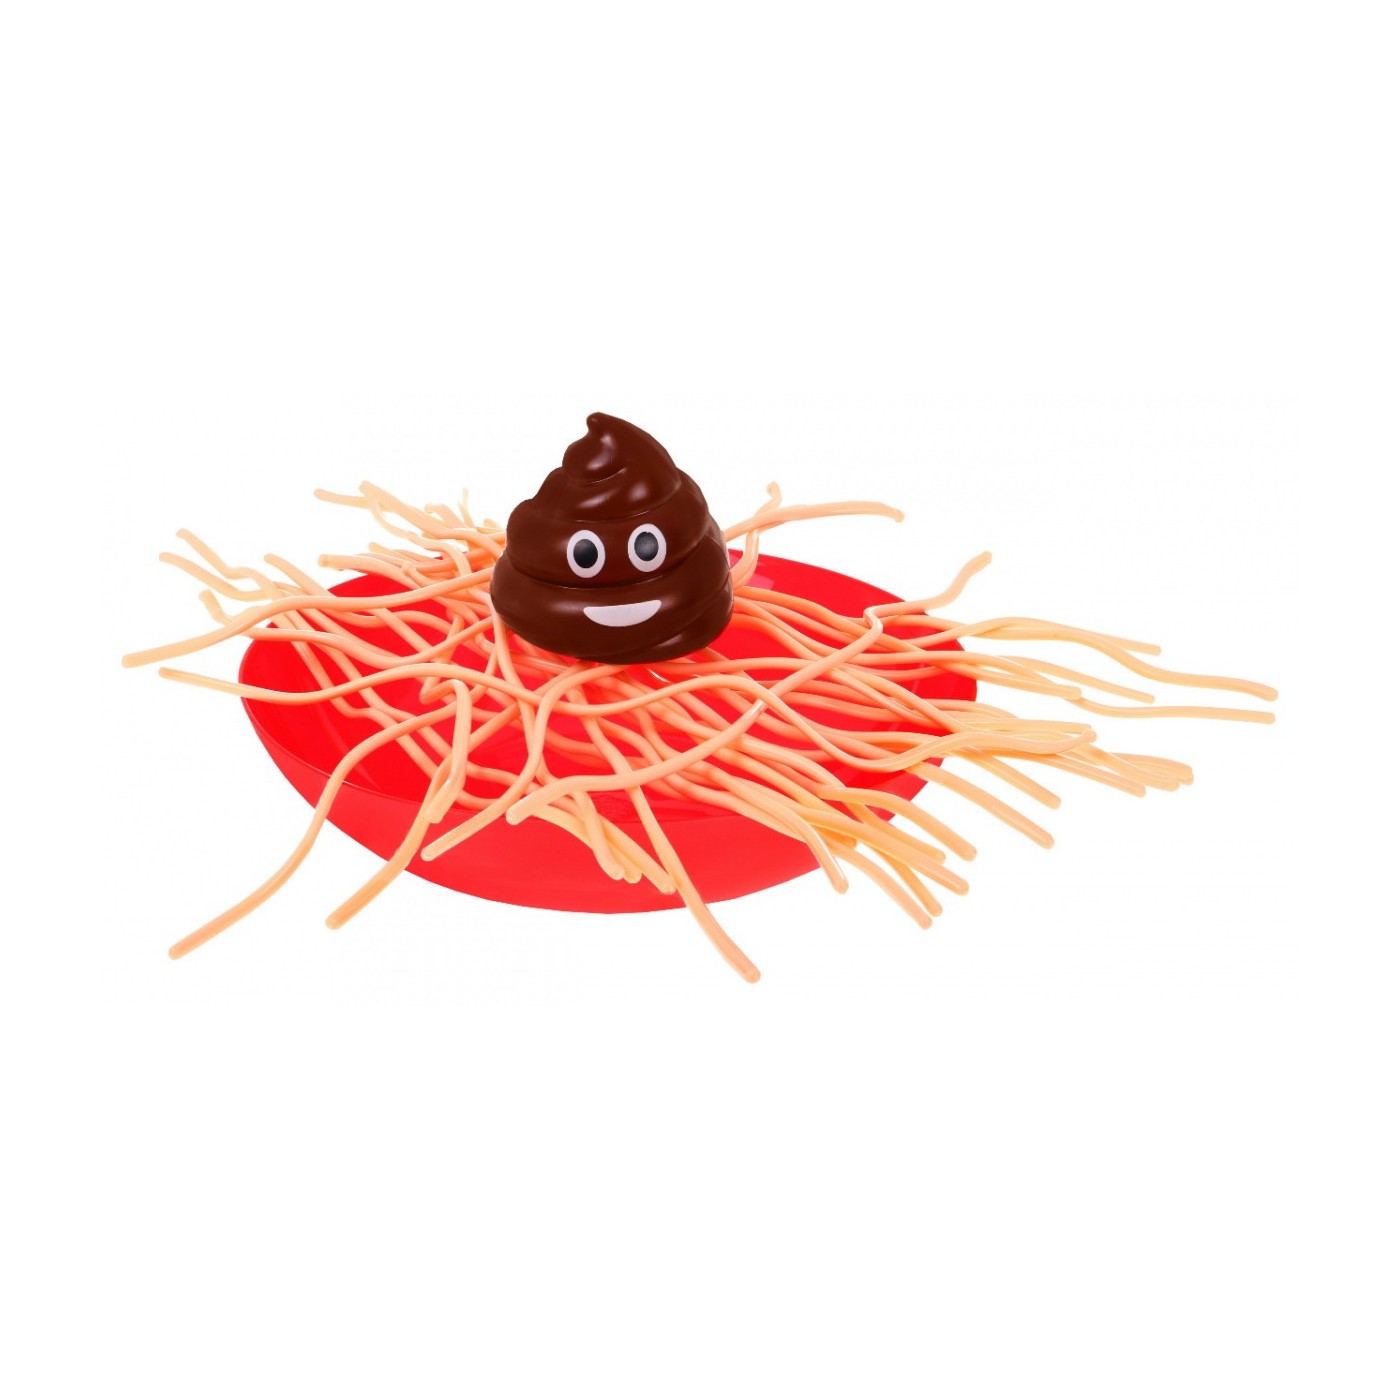 Game Shooting a pile of Spaghetti